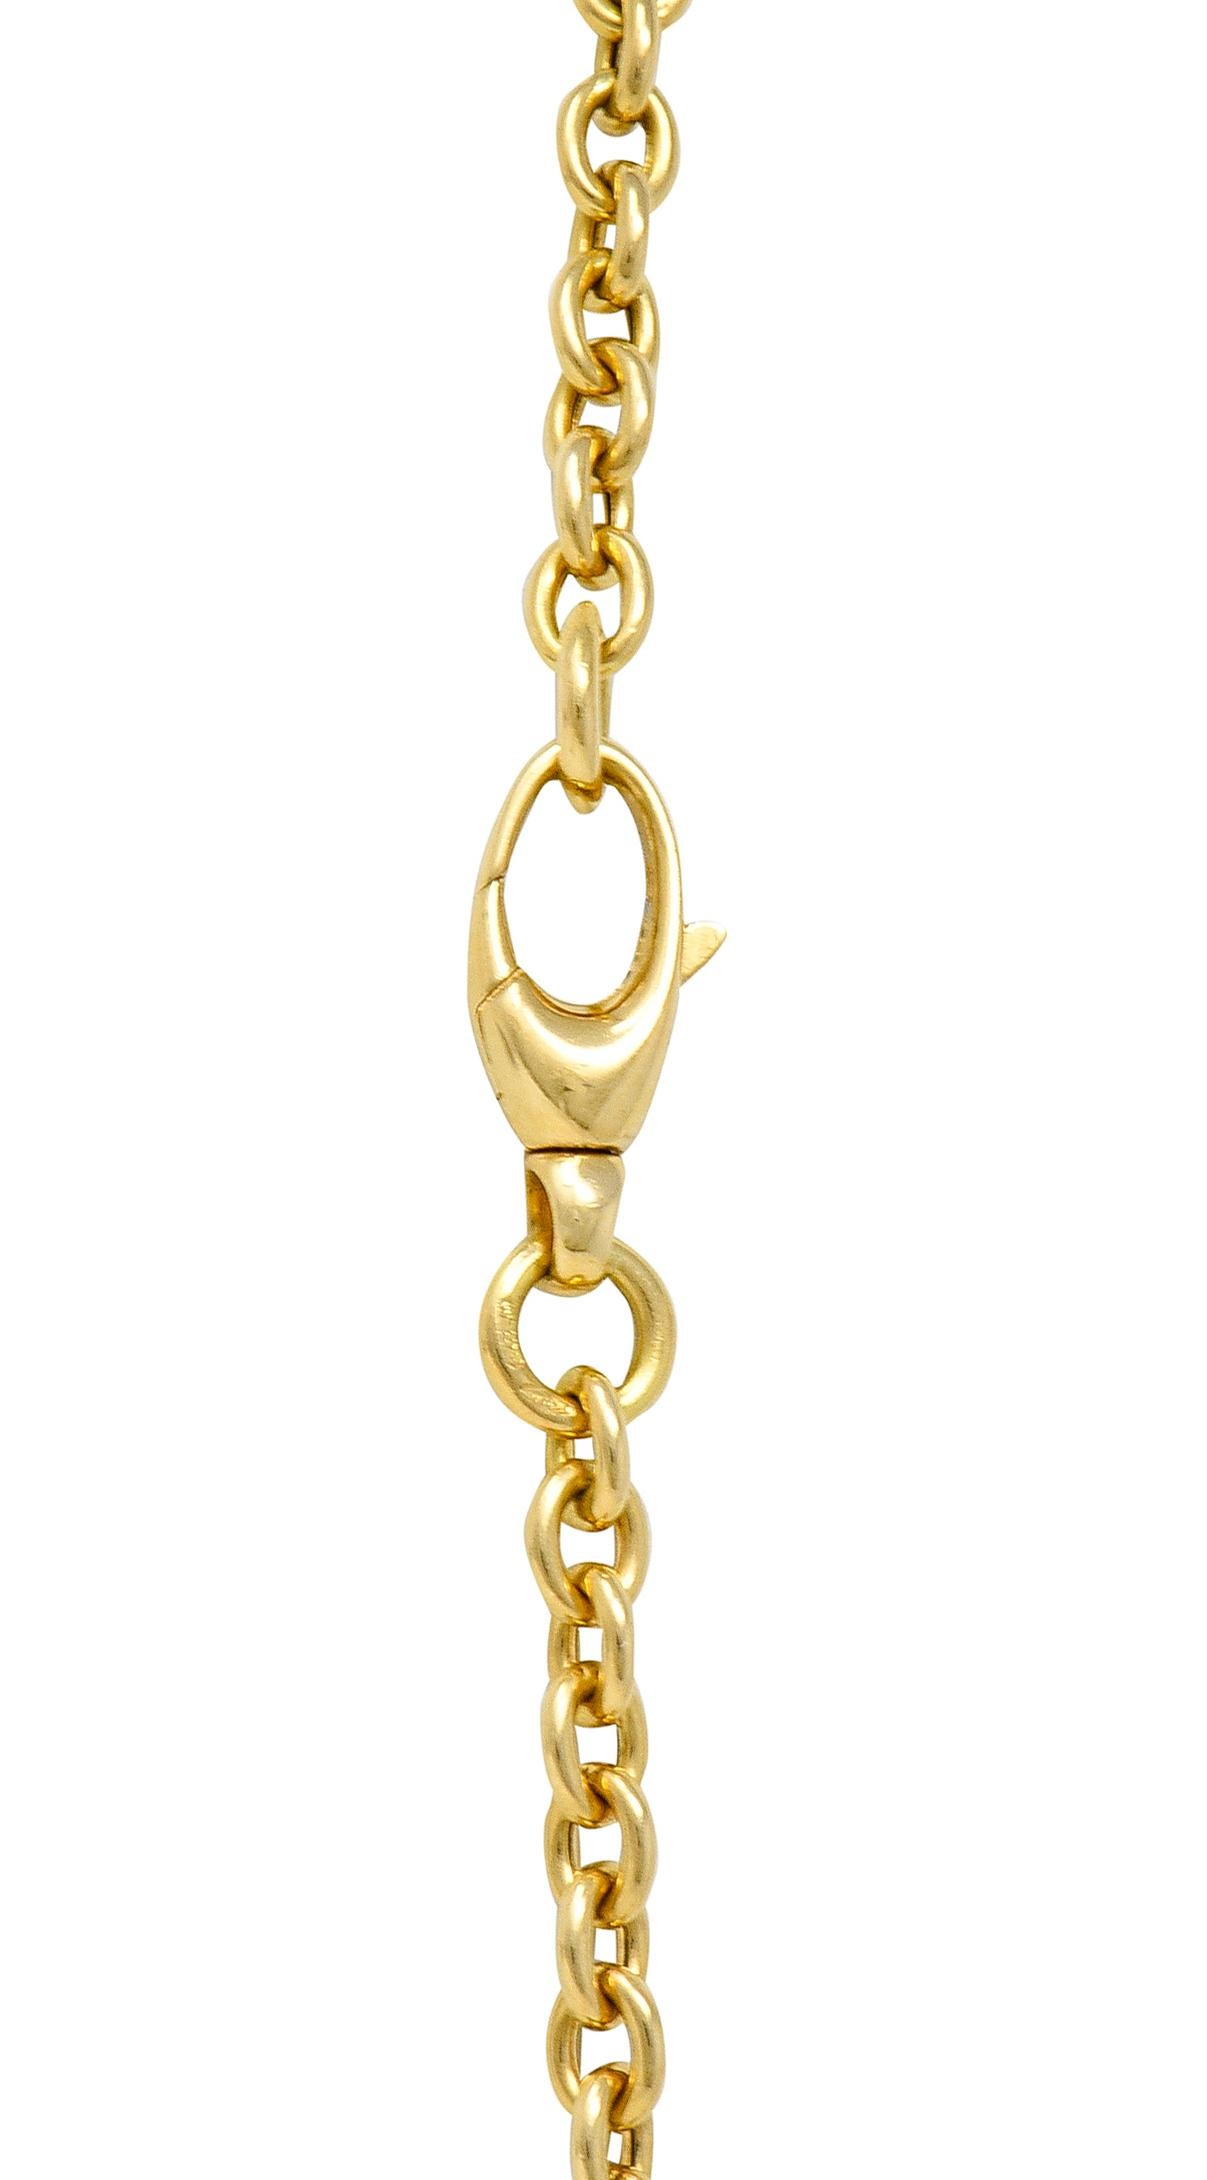 Gucci 18 Karat Yellow Gold Horsebit Link Vintage Chain Necklace 1